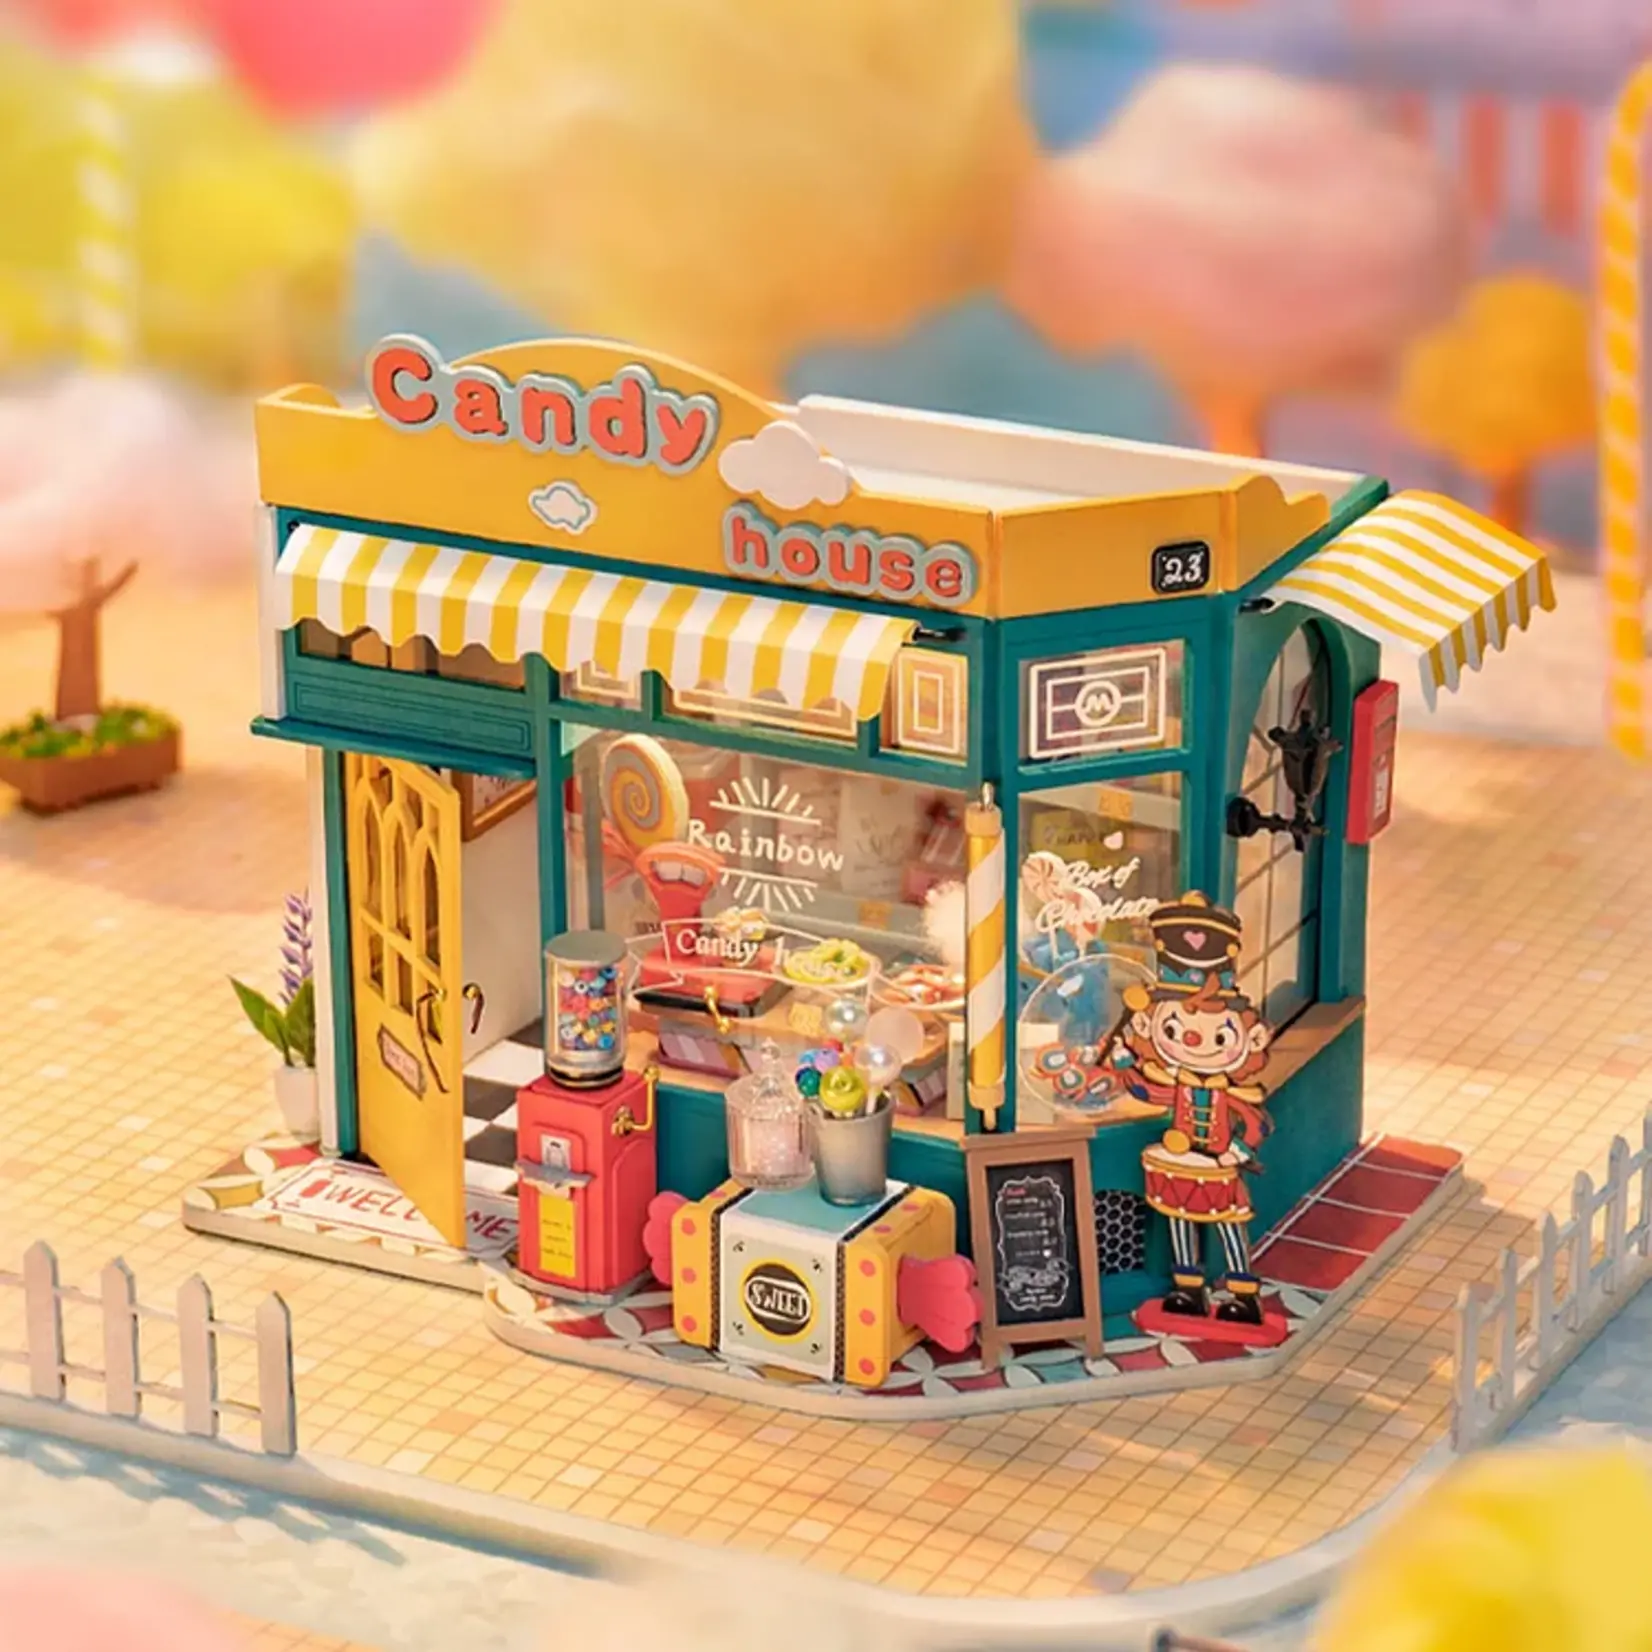 Rainbow Candy House Model